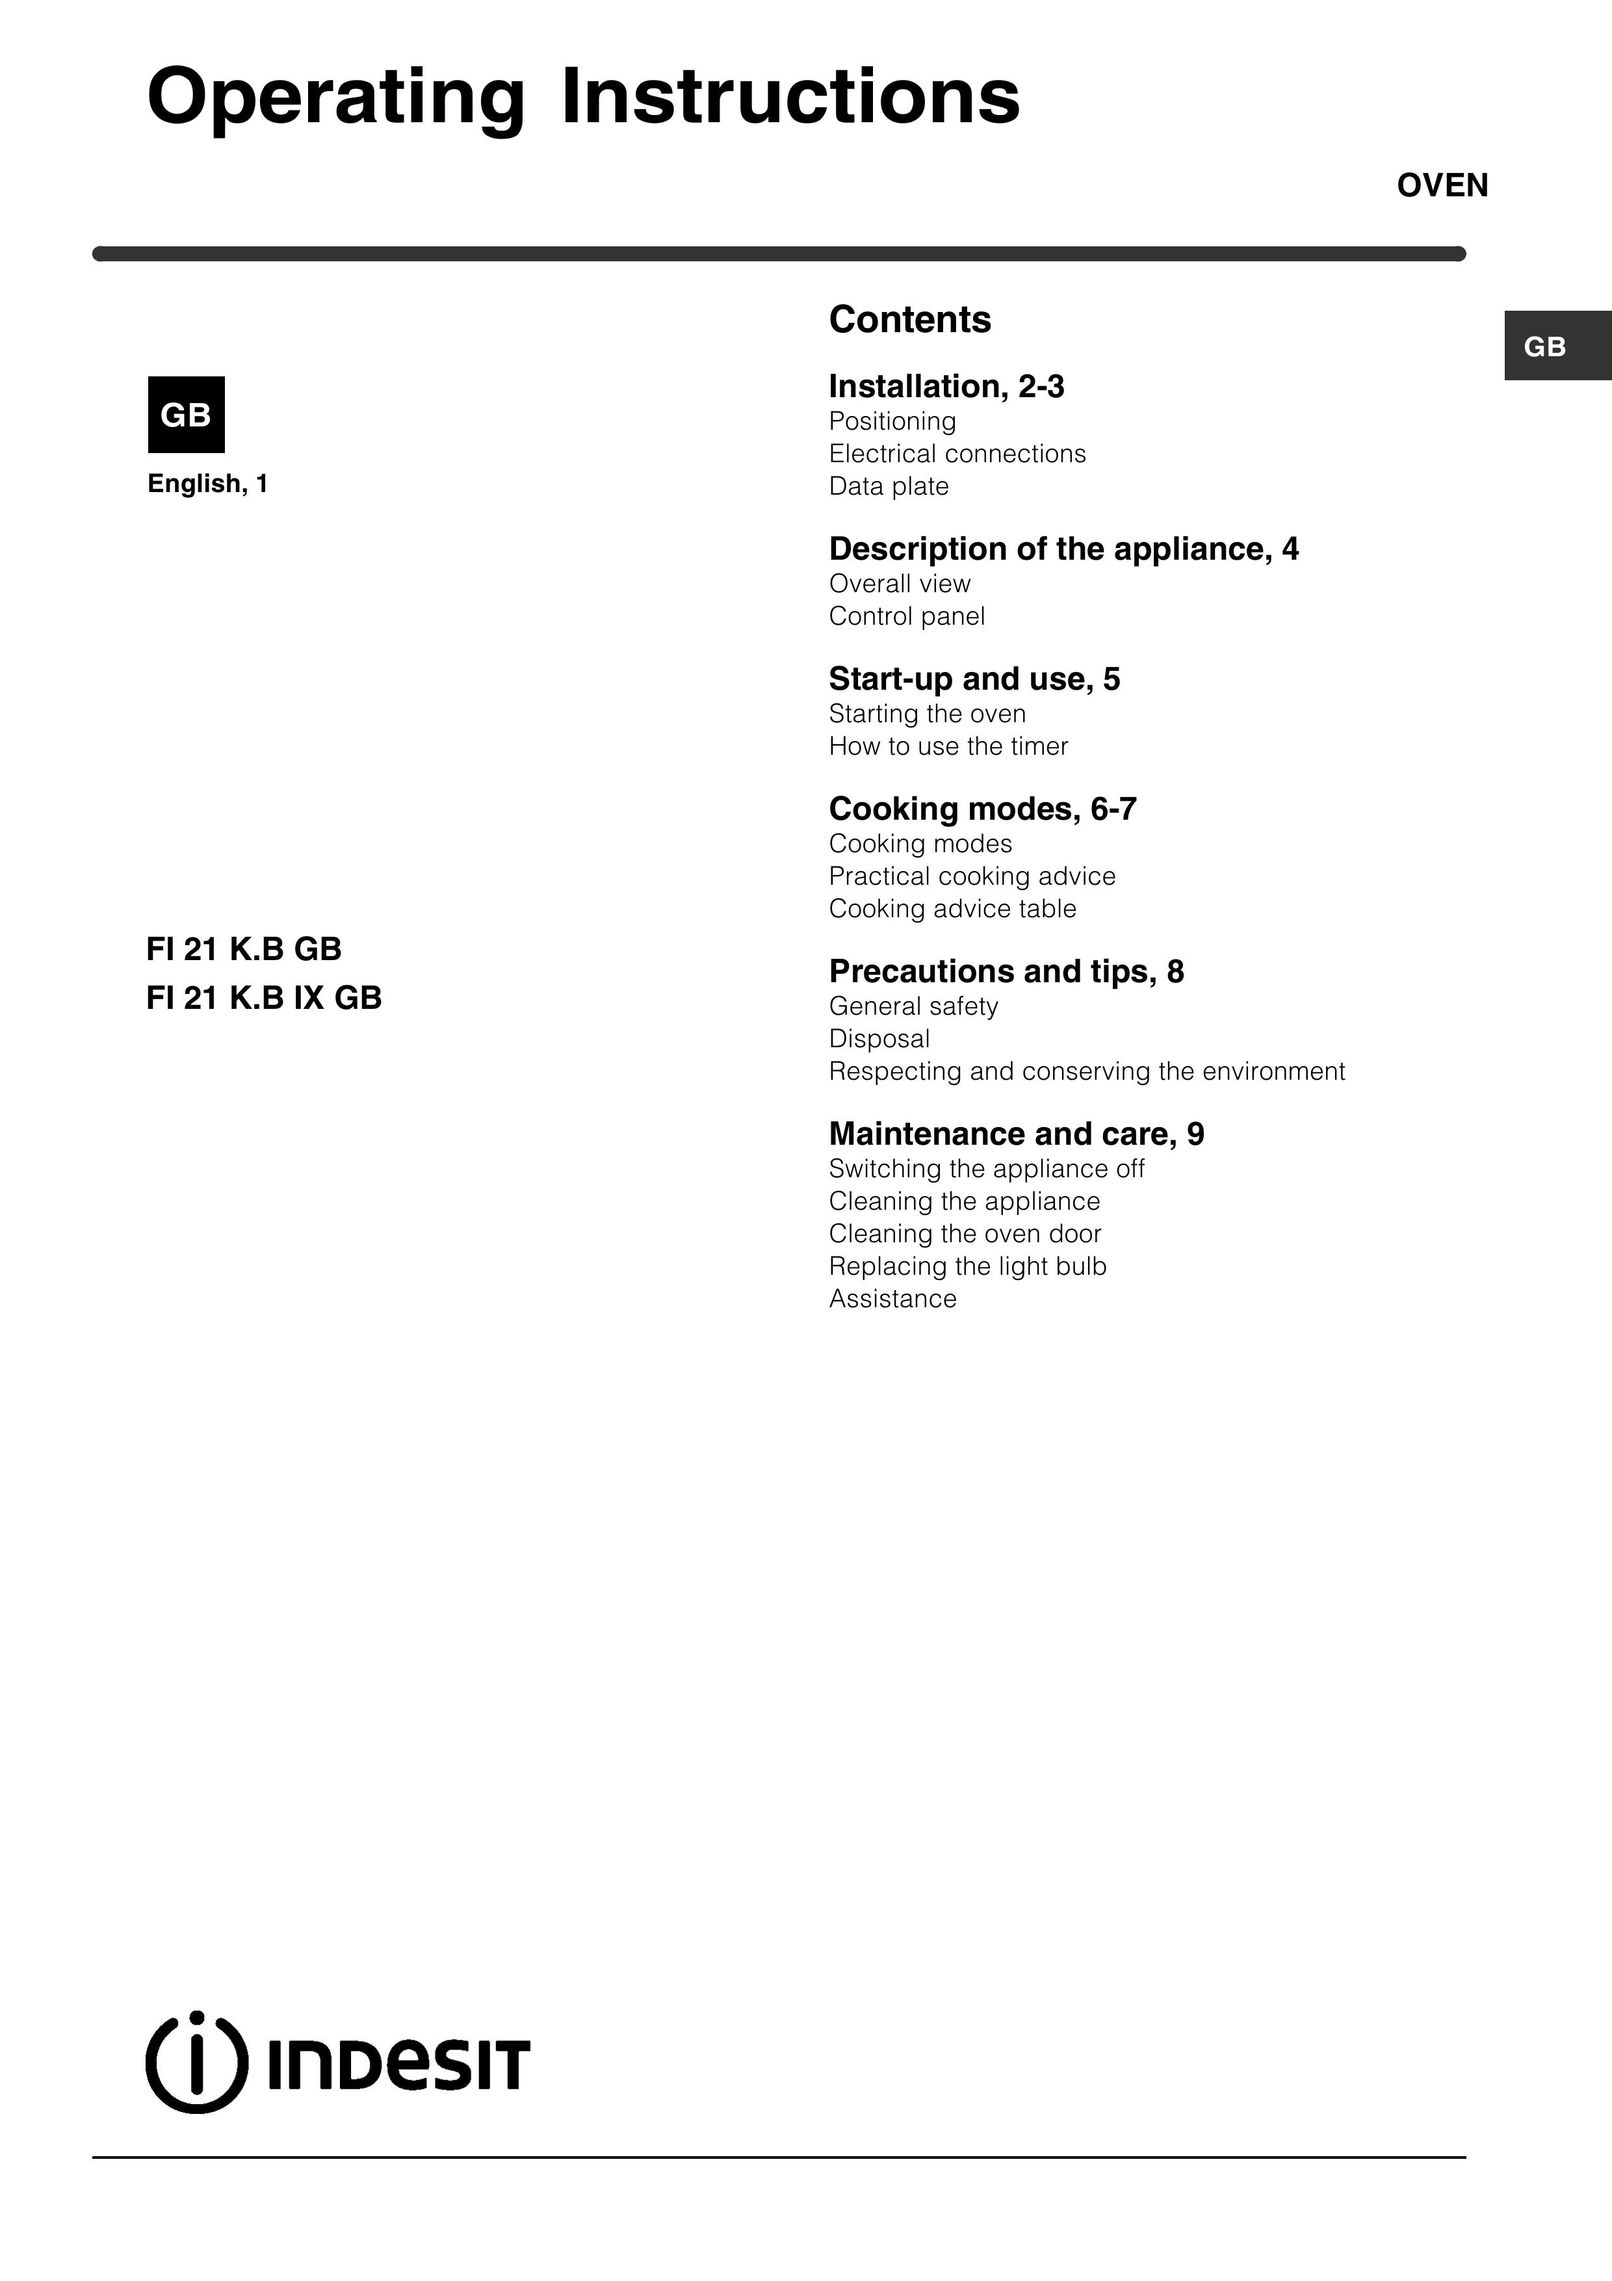 Indesit FI 21 K.B GB Oven User Manual